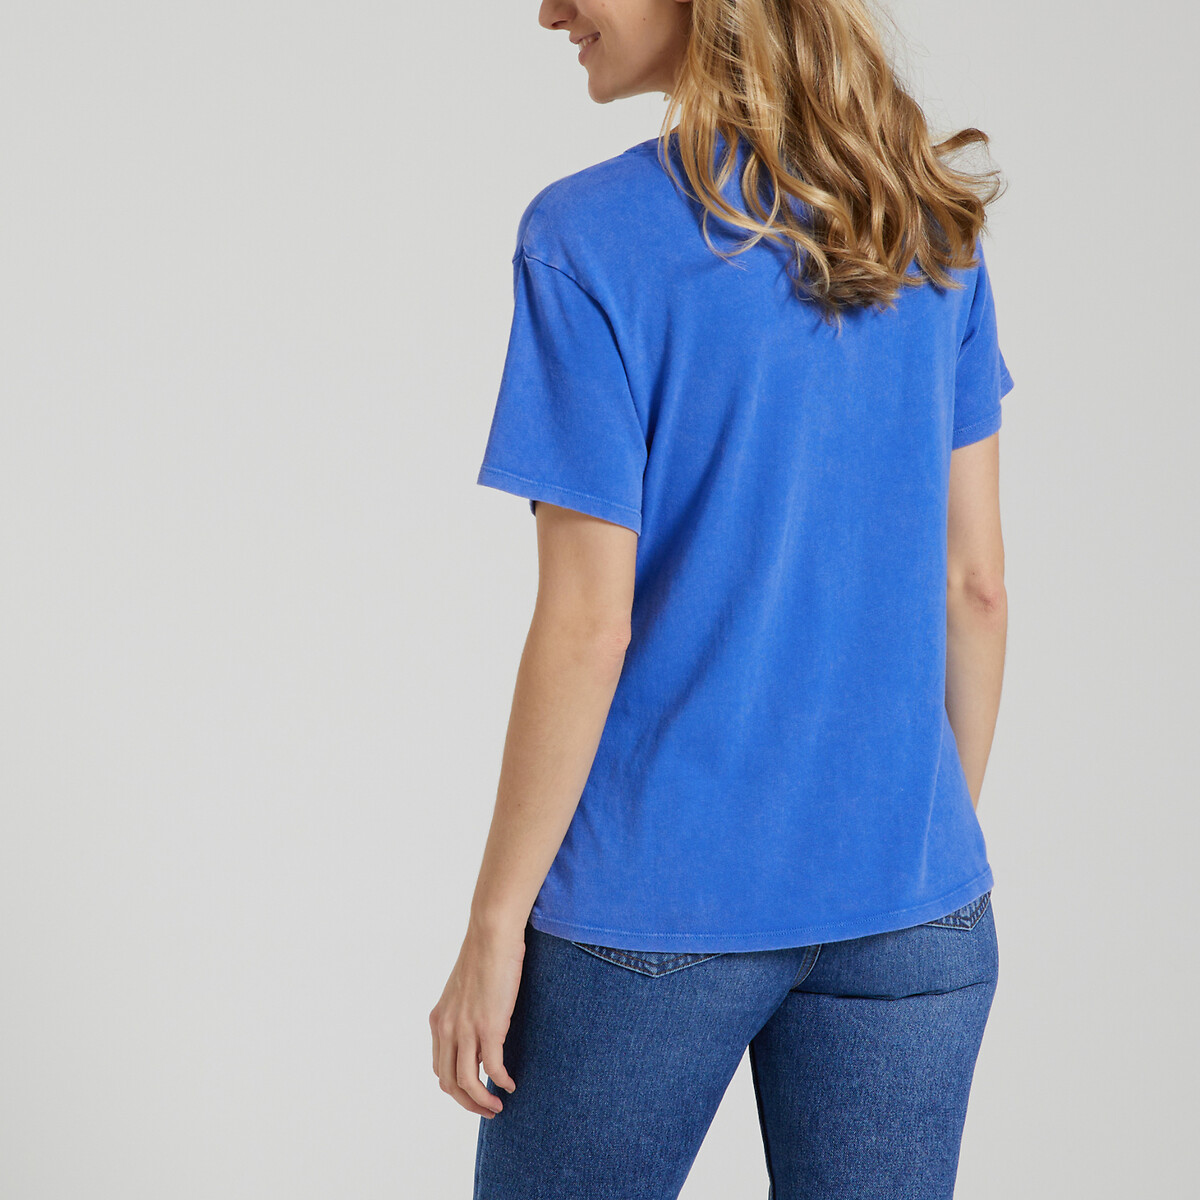 La mit schriftzug Redoute | blau Porter T-shirt T. Freeman